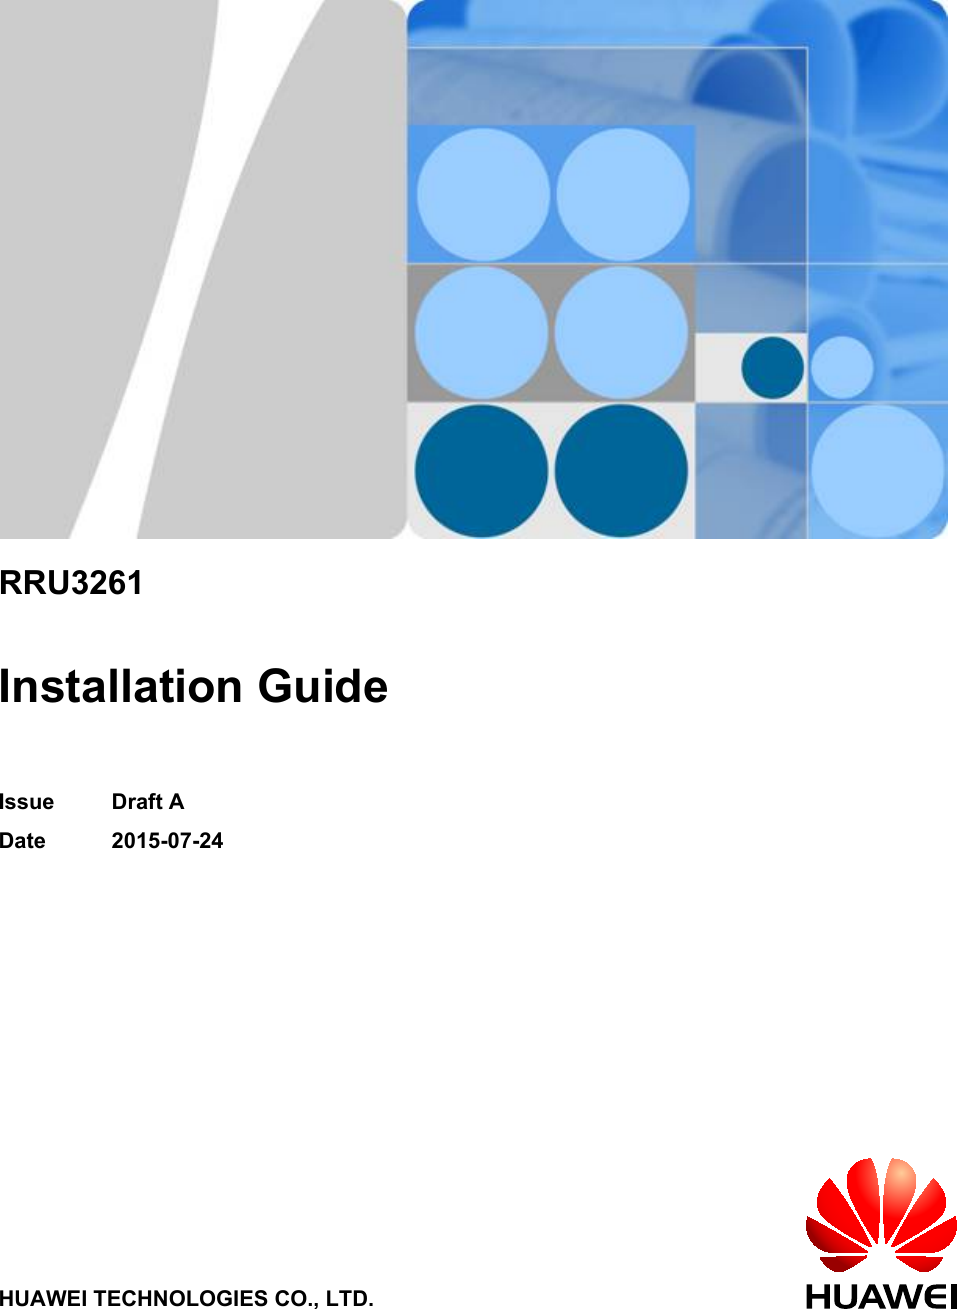 RRU3261Installation GuideIssue Draft ADate 2015-07-24HUAWEI TECHNOLOGIES CO., LTD.